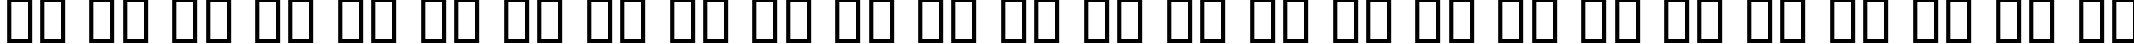 Пример написания английского алфавита шрифтом B Koodak Outline